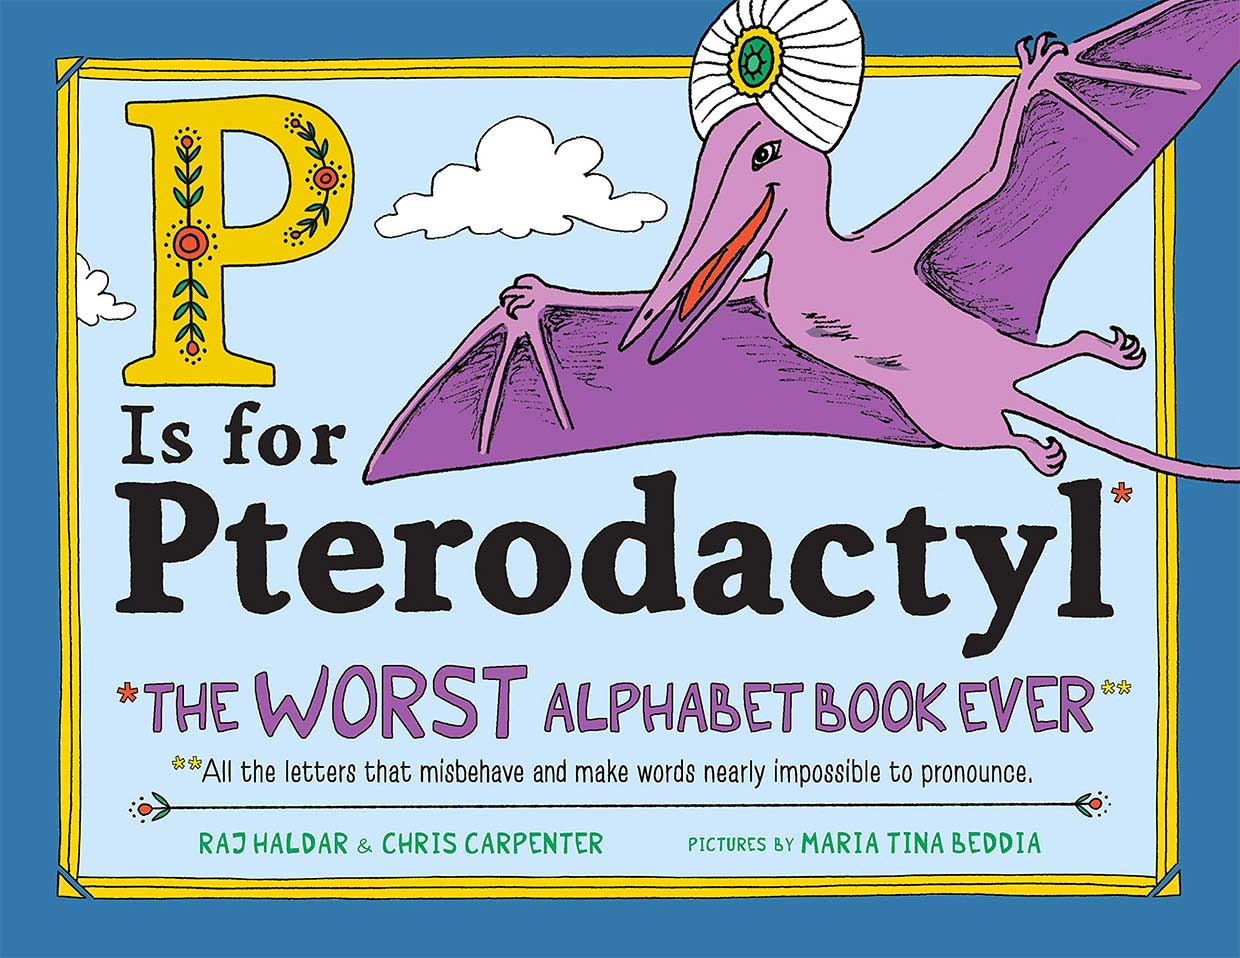 P steht für Pterodactylus p-is-for-pterodactyl_01 